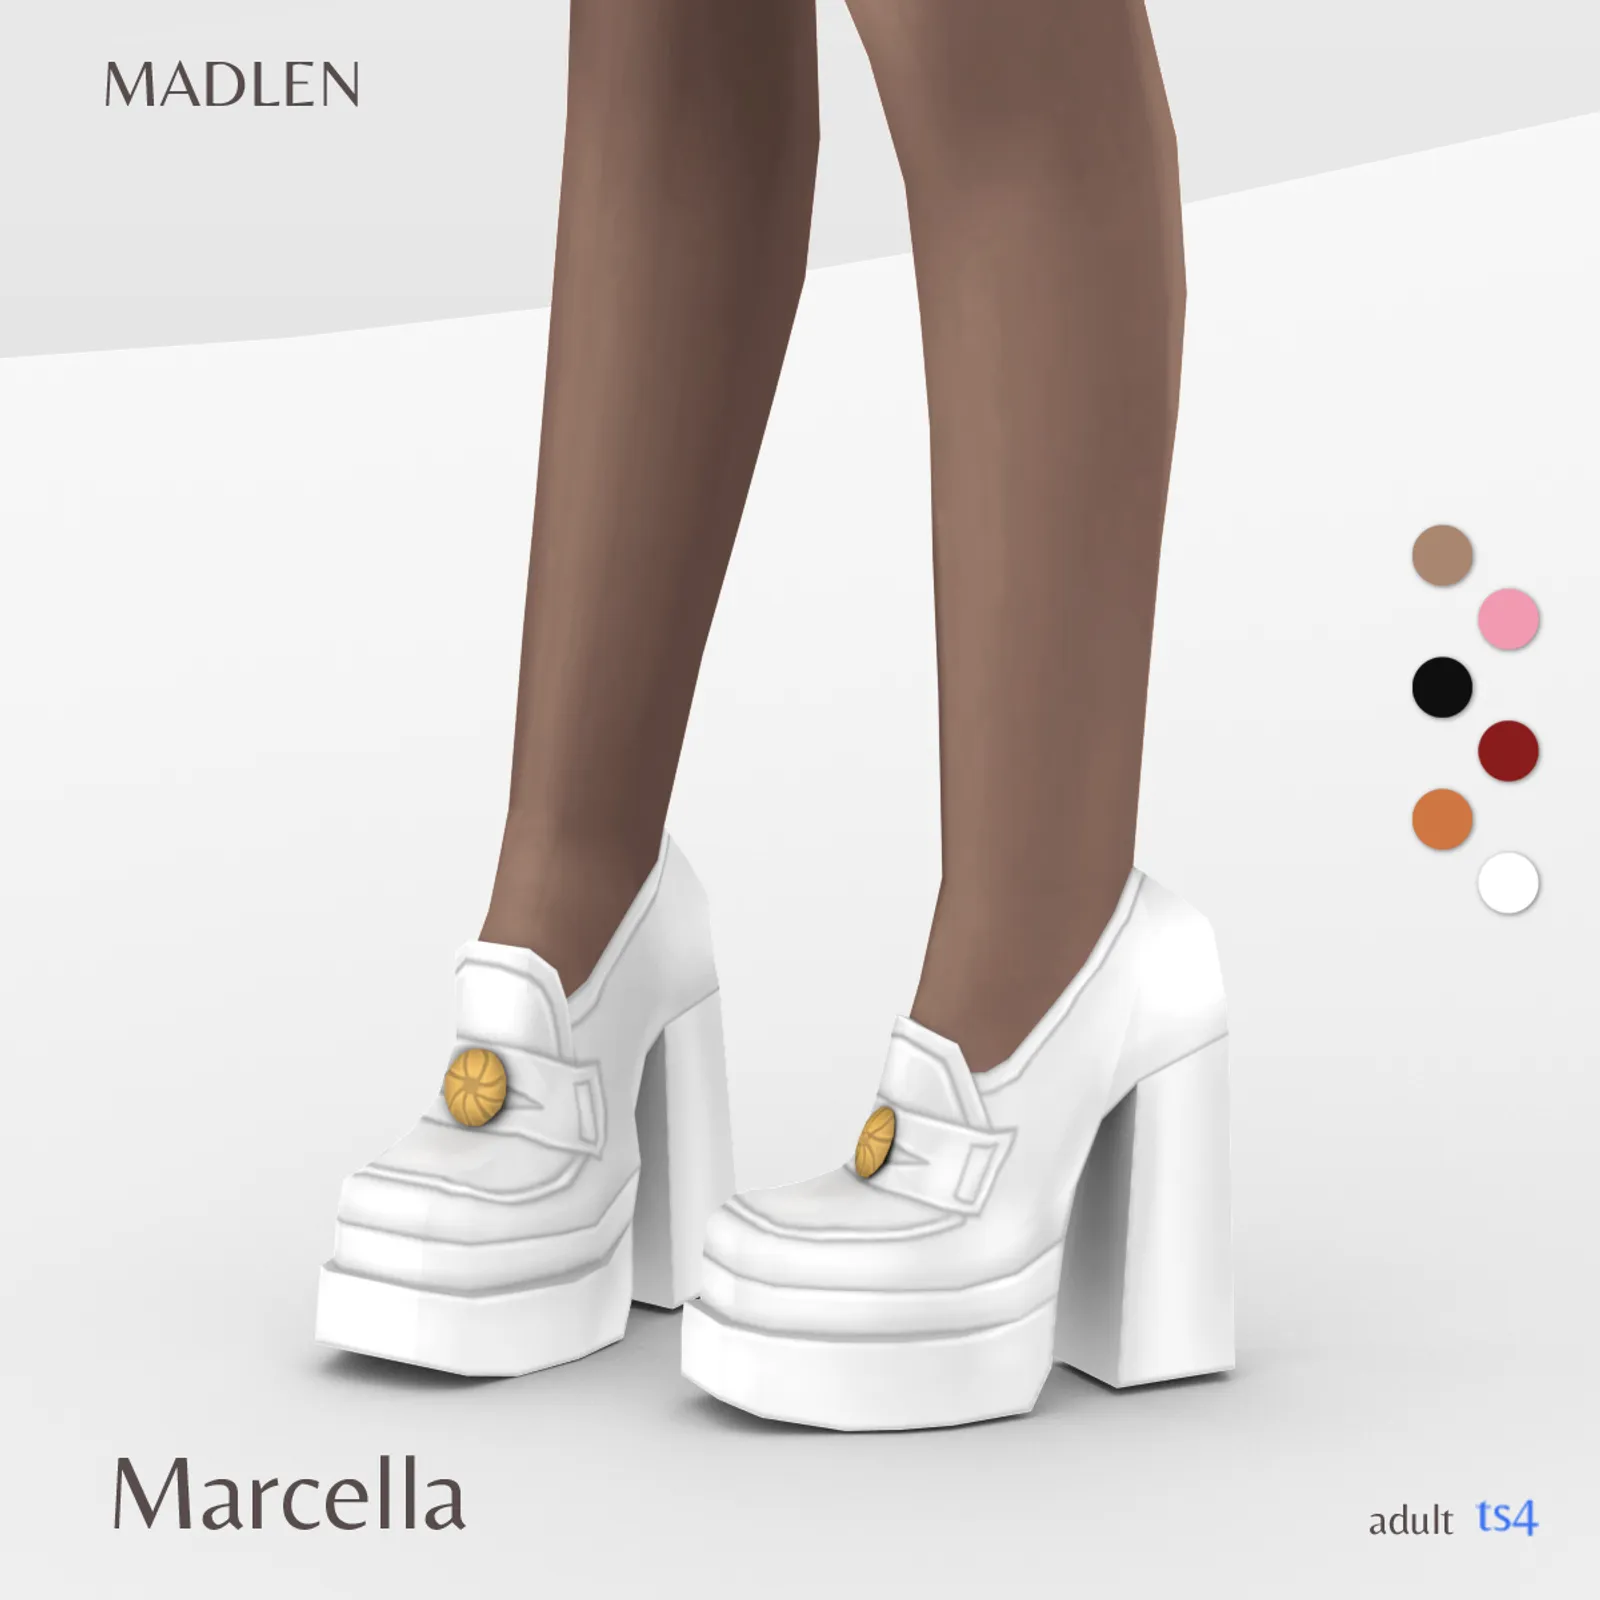 Marcella Shoes